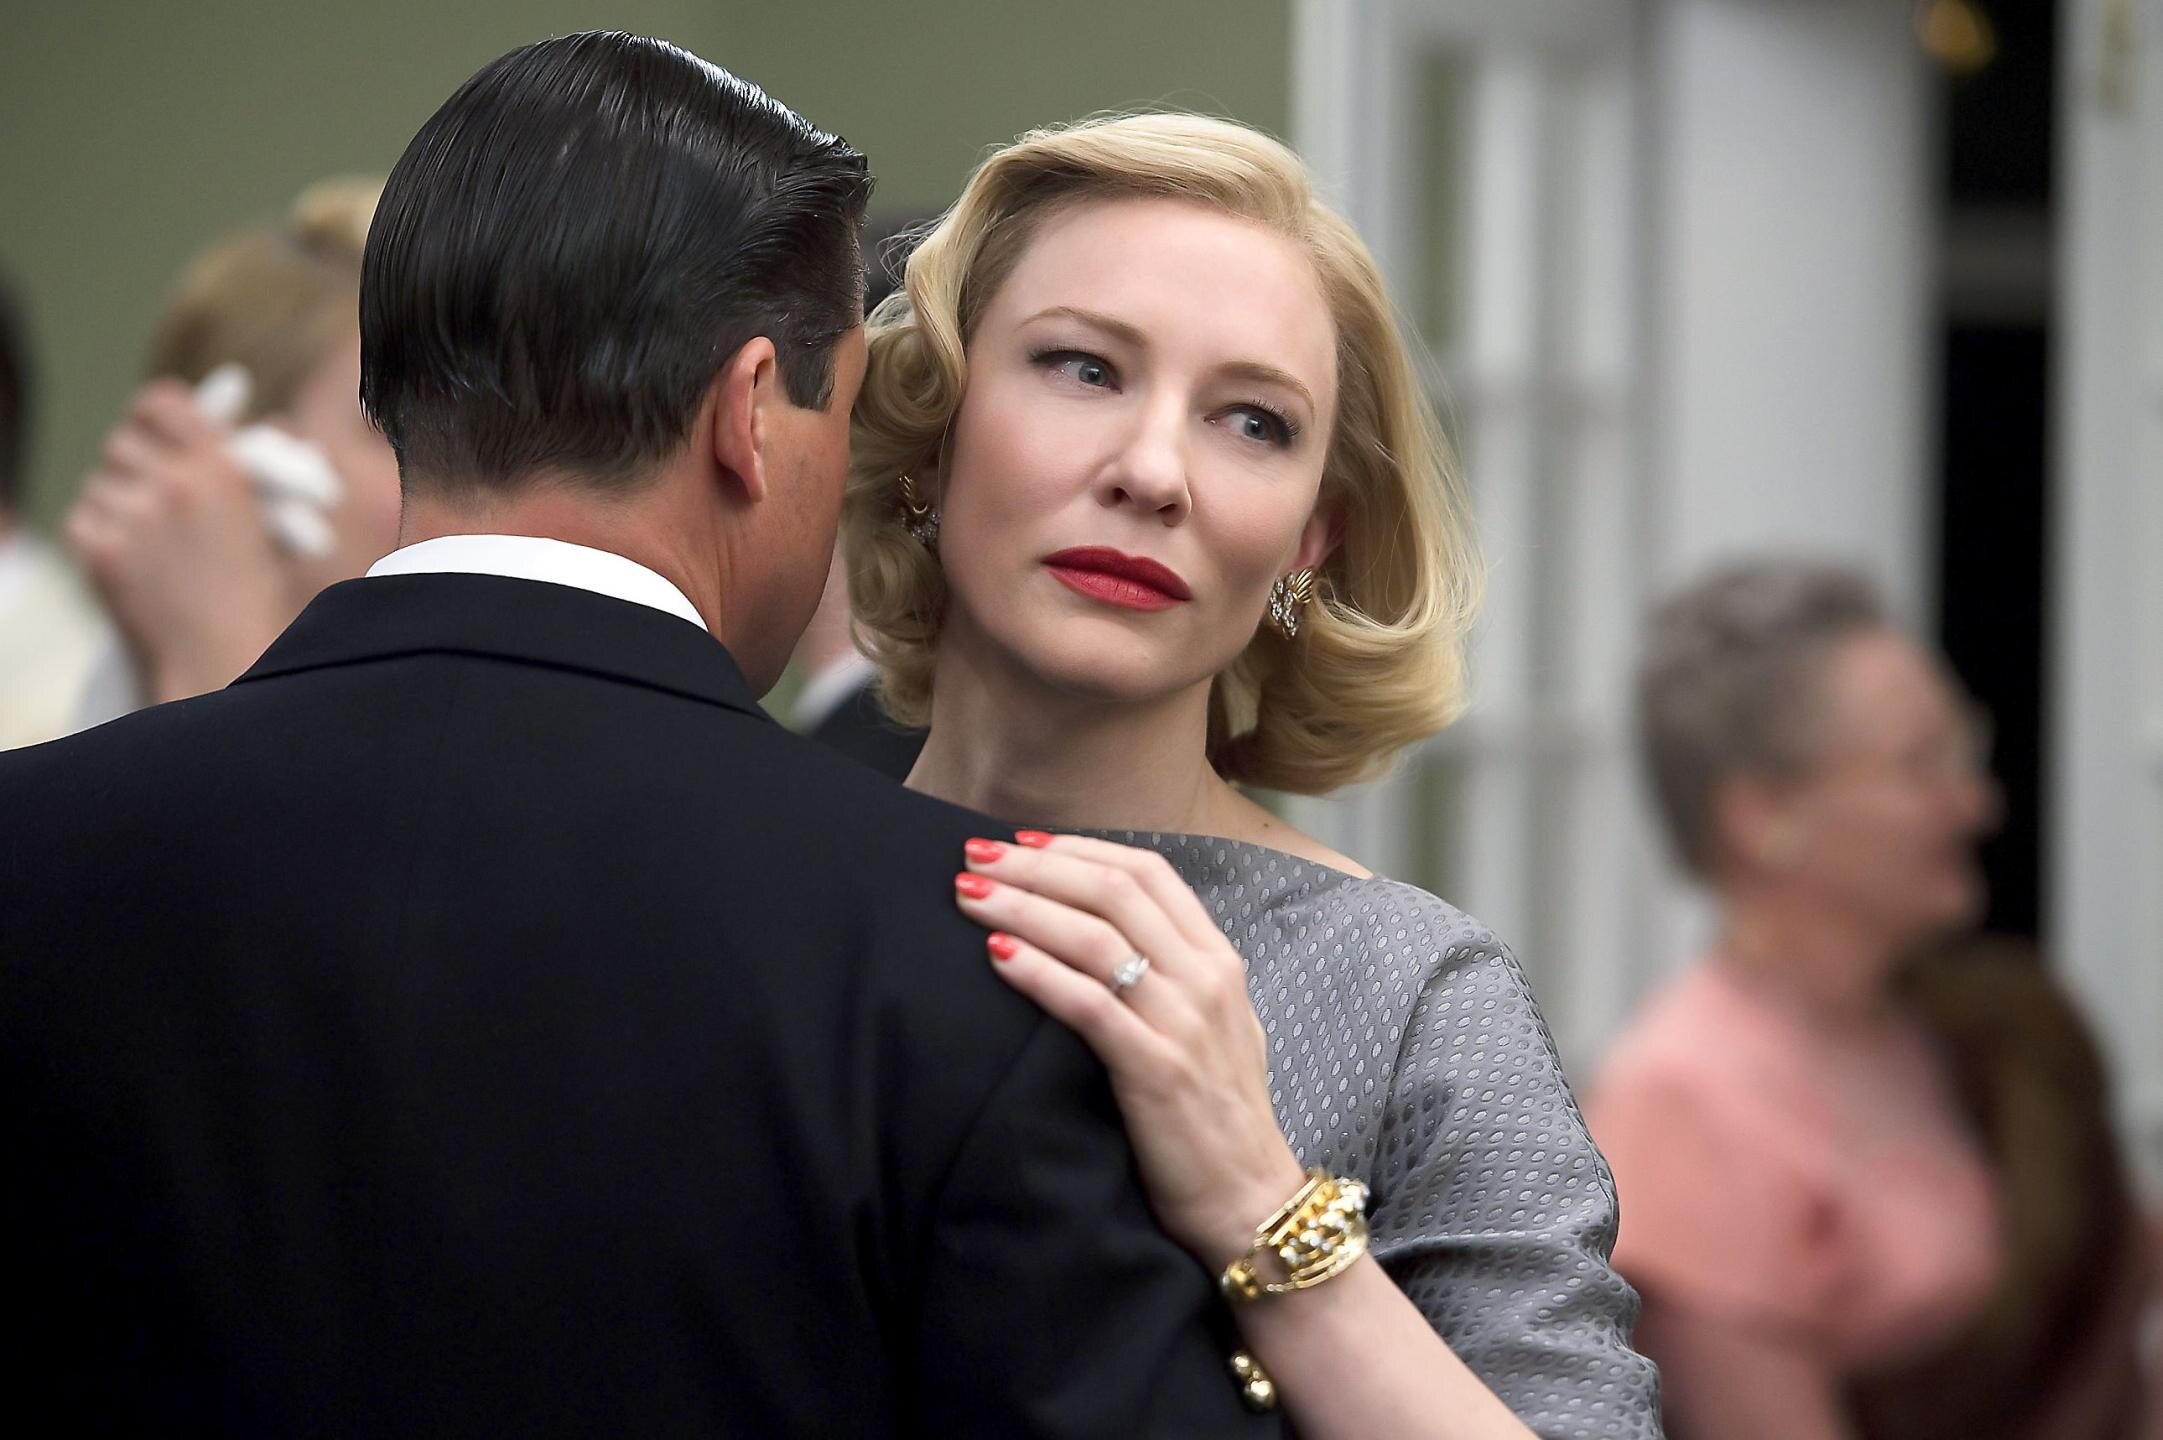 Kadr z filmu „Carol” (2015)